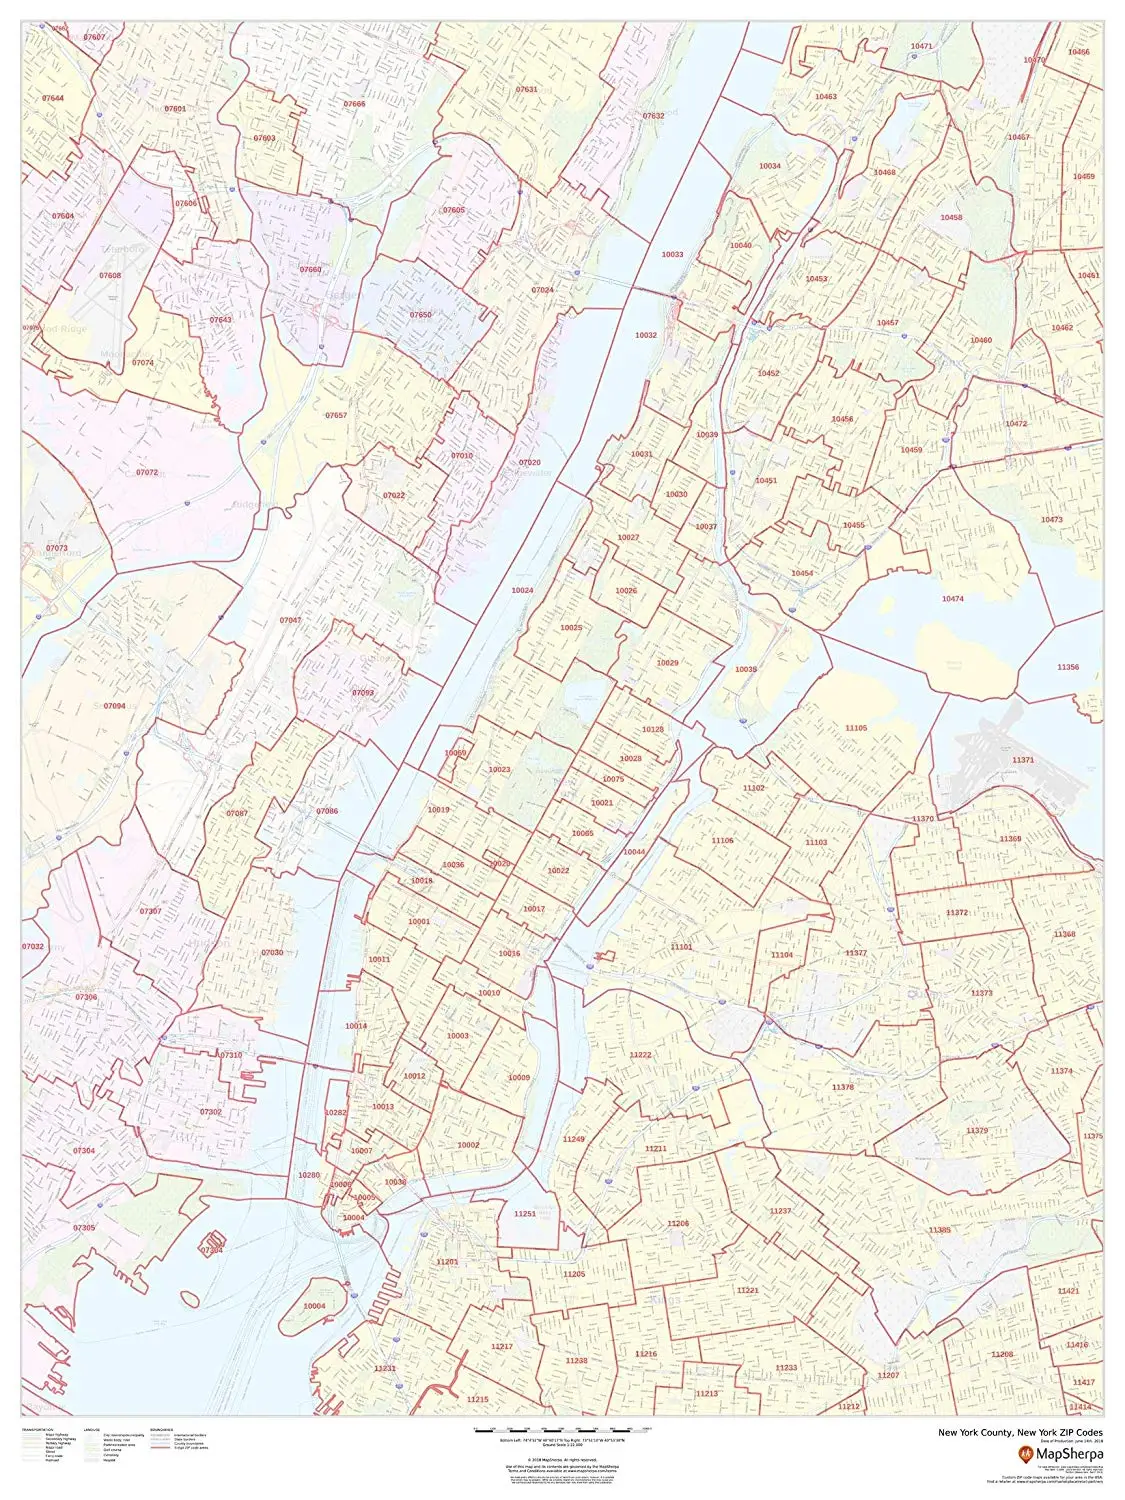 Cheap New York Zip Codes Map Find New York Zip Codes Map Deals On